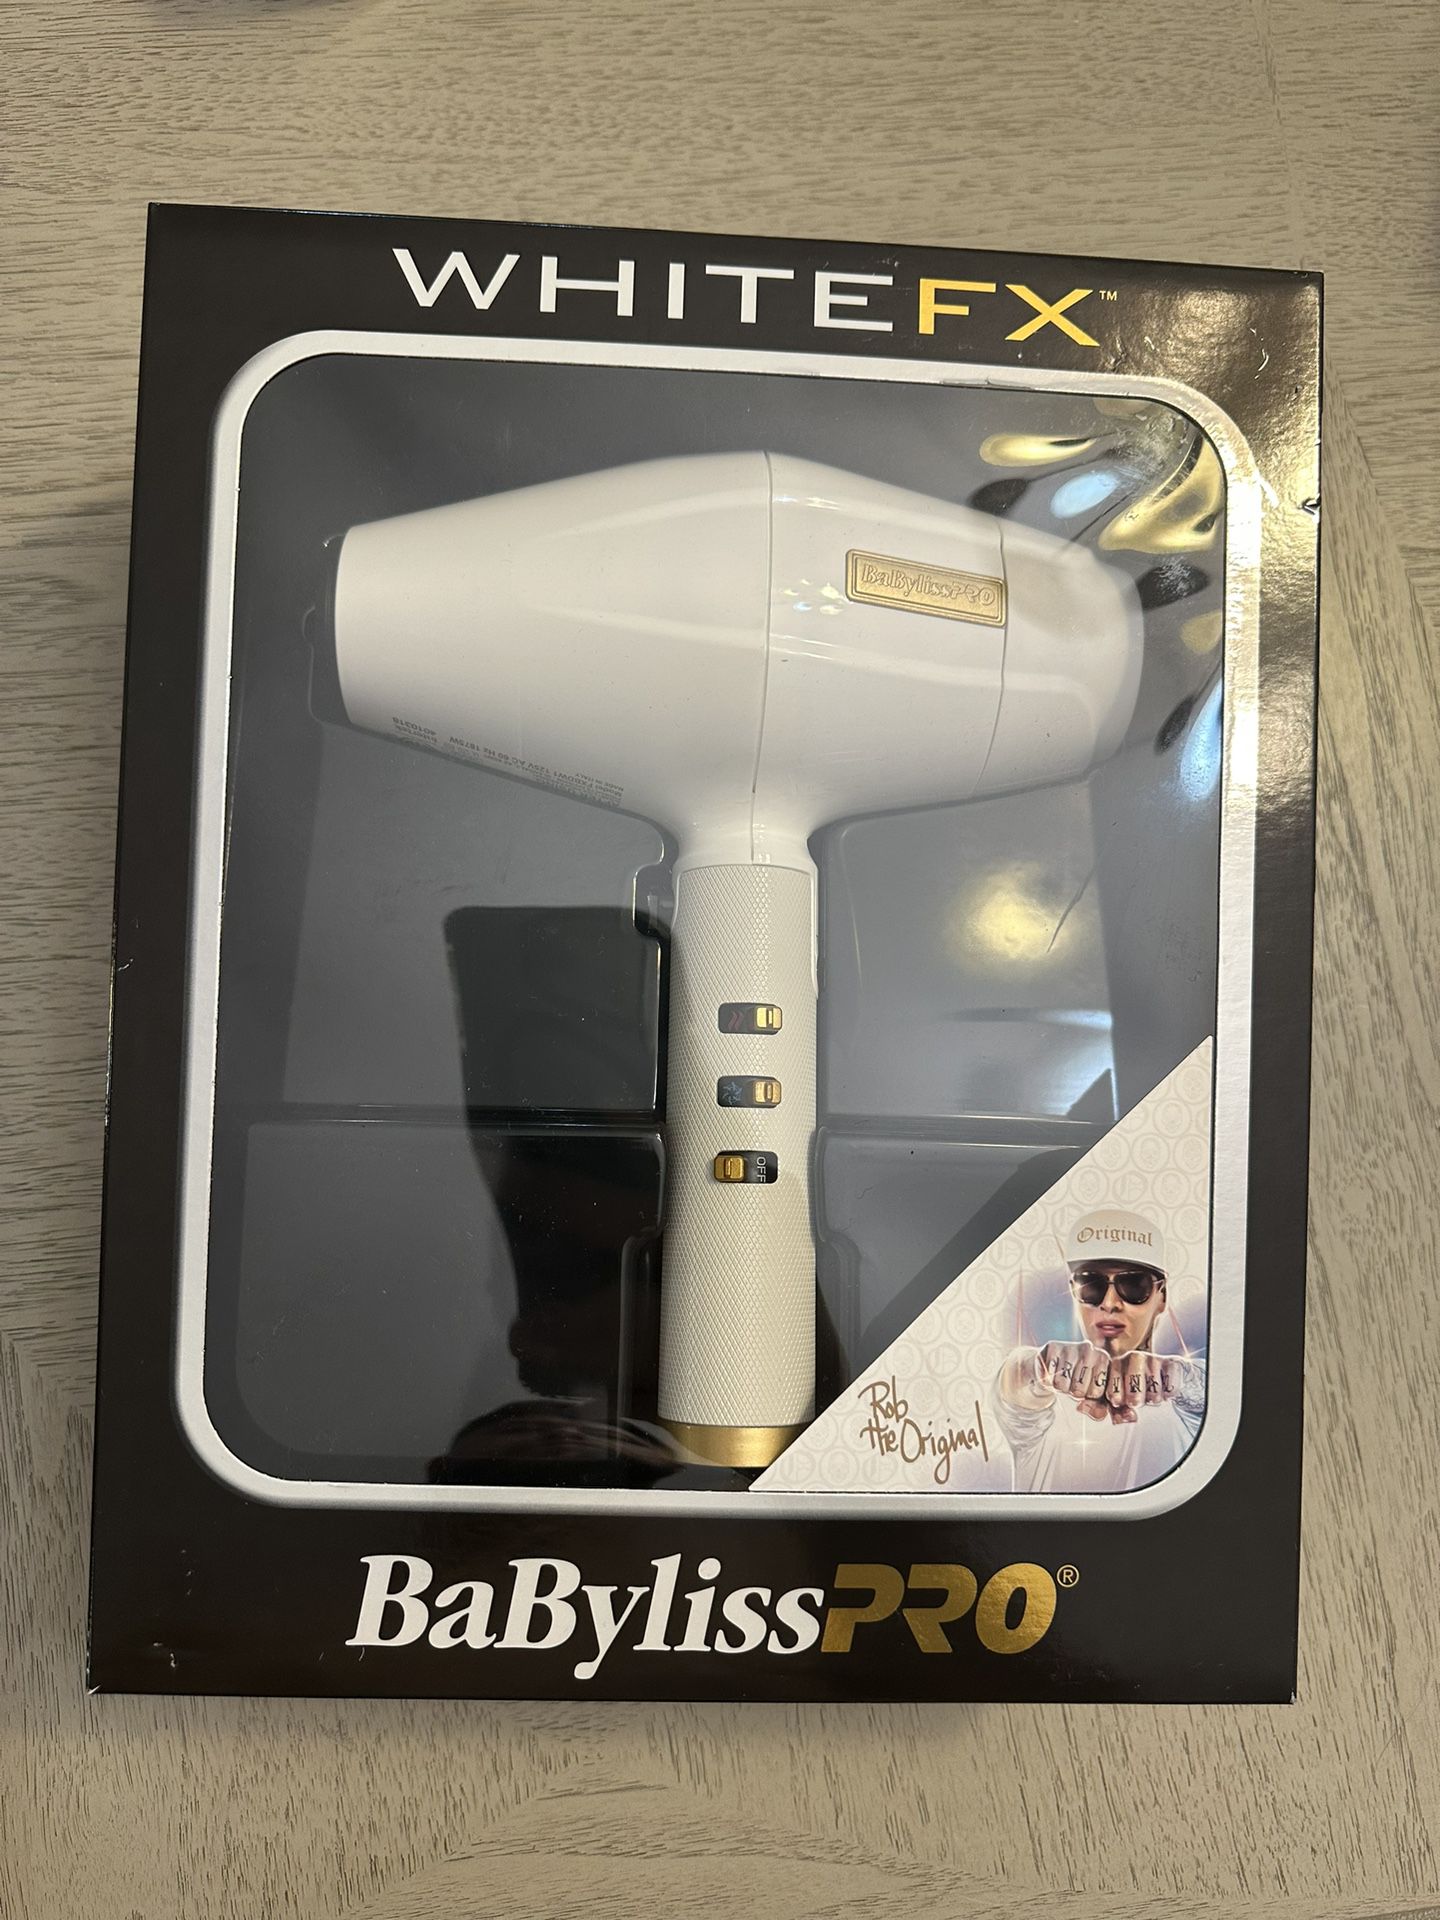 Babyliss PRO White FX High Performance Turbo Hair Dryer